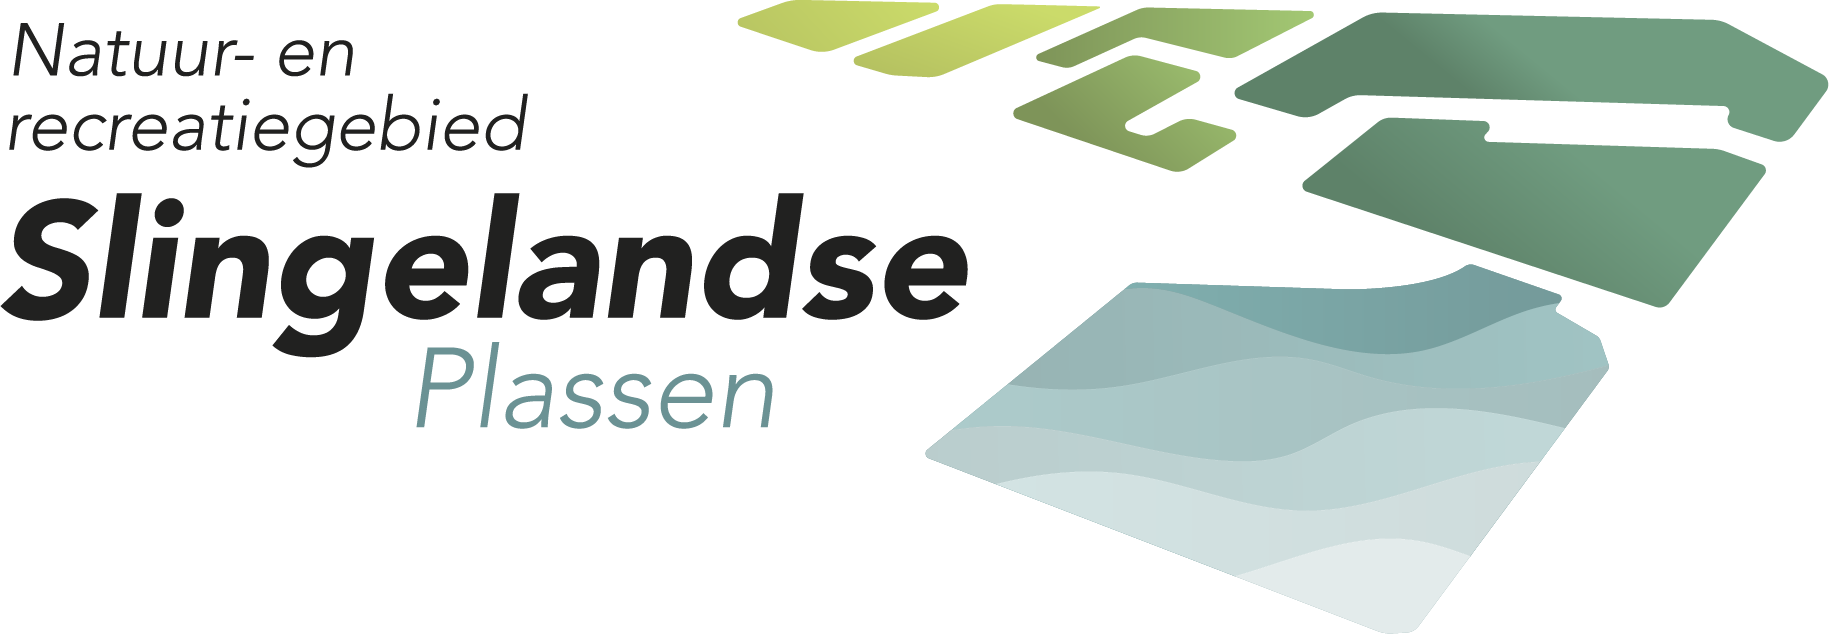 Slingelandse Plassen logo